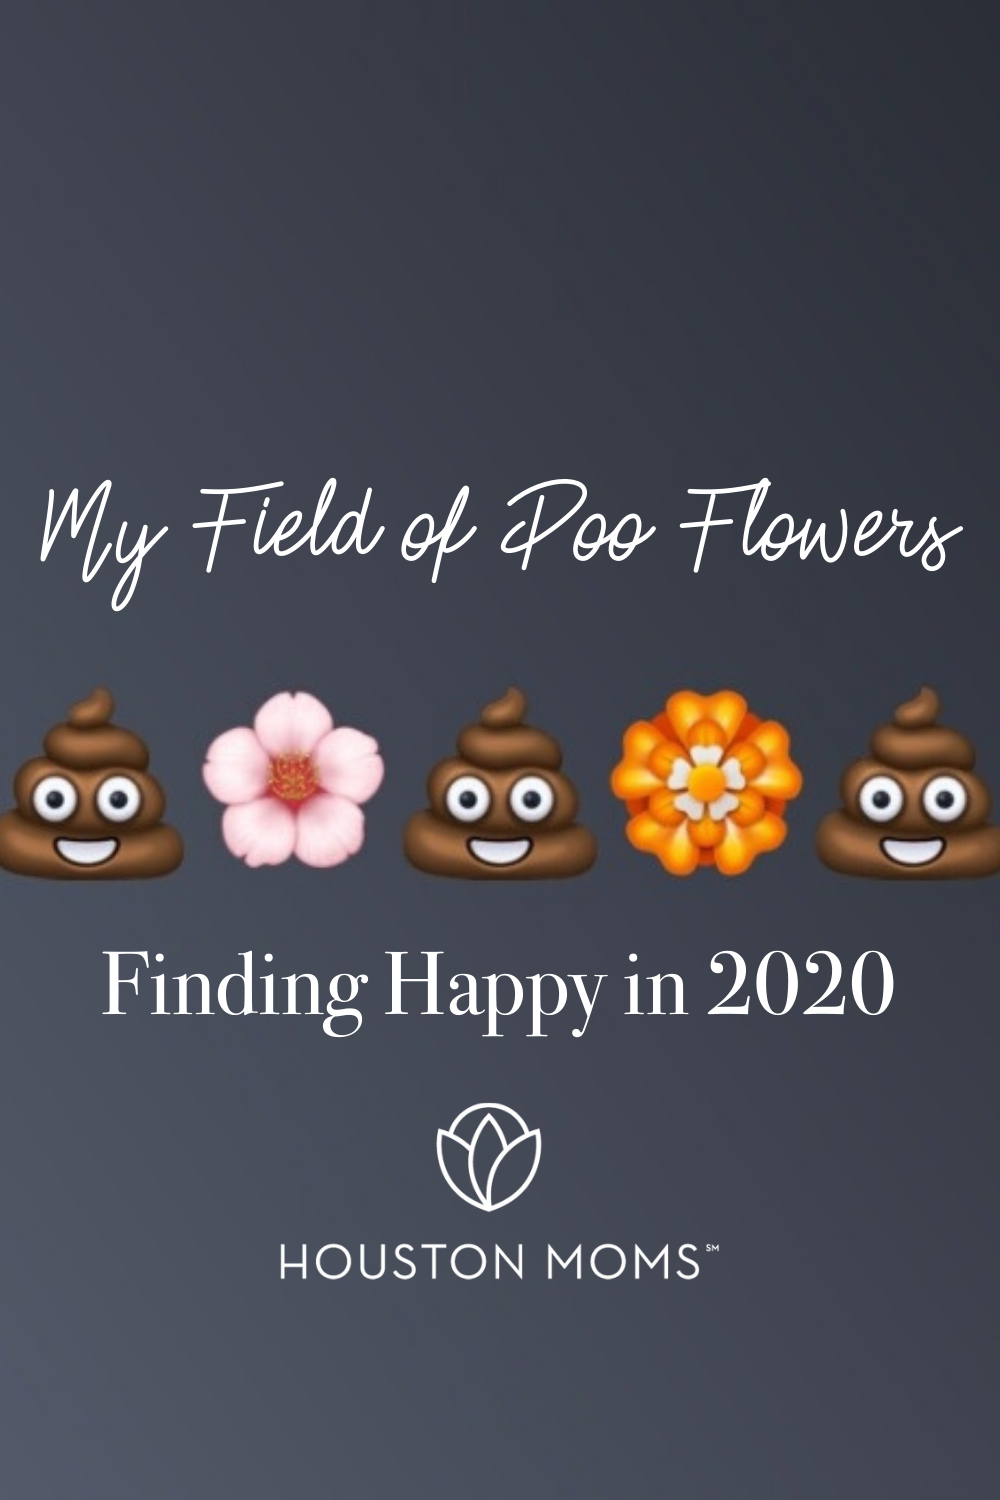 Houston Moms "My Field of Poo Flowers:: Finding Happy in 2020" #houstonmoms #houstonmomsblog #momsaroundhouston